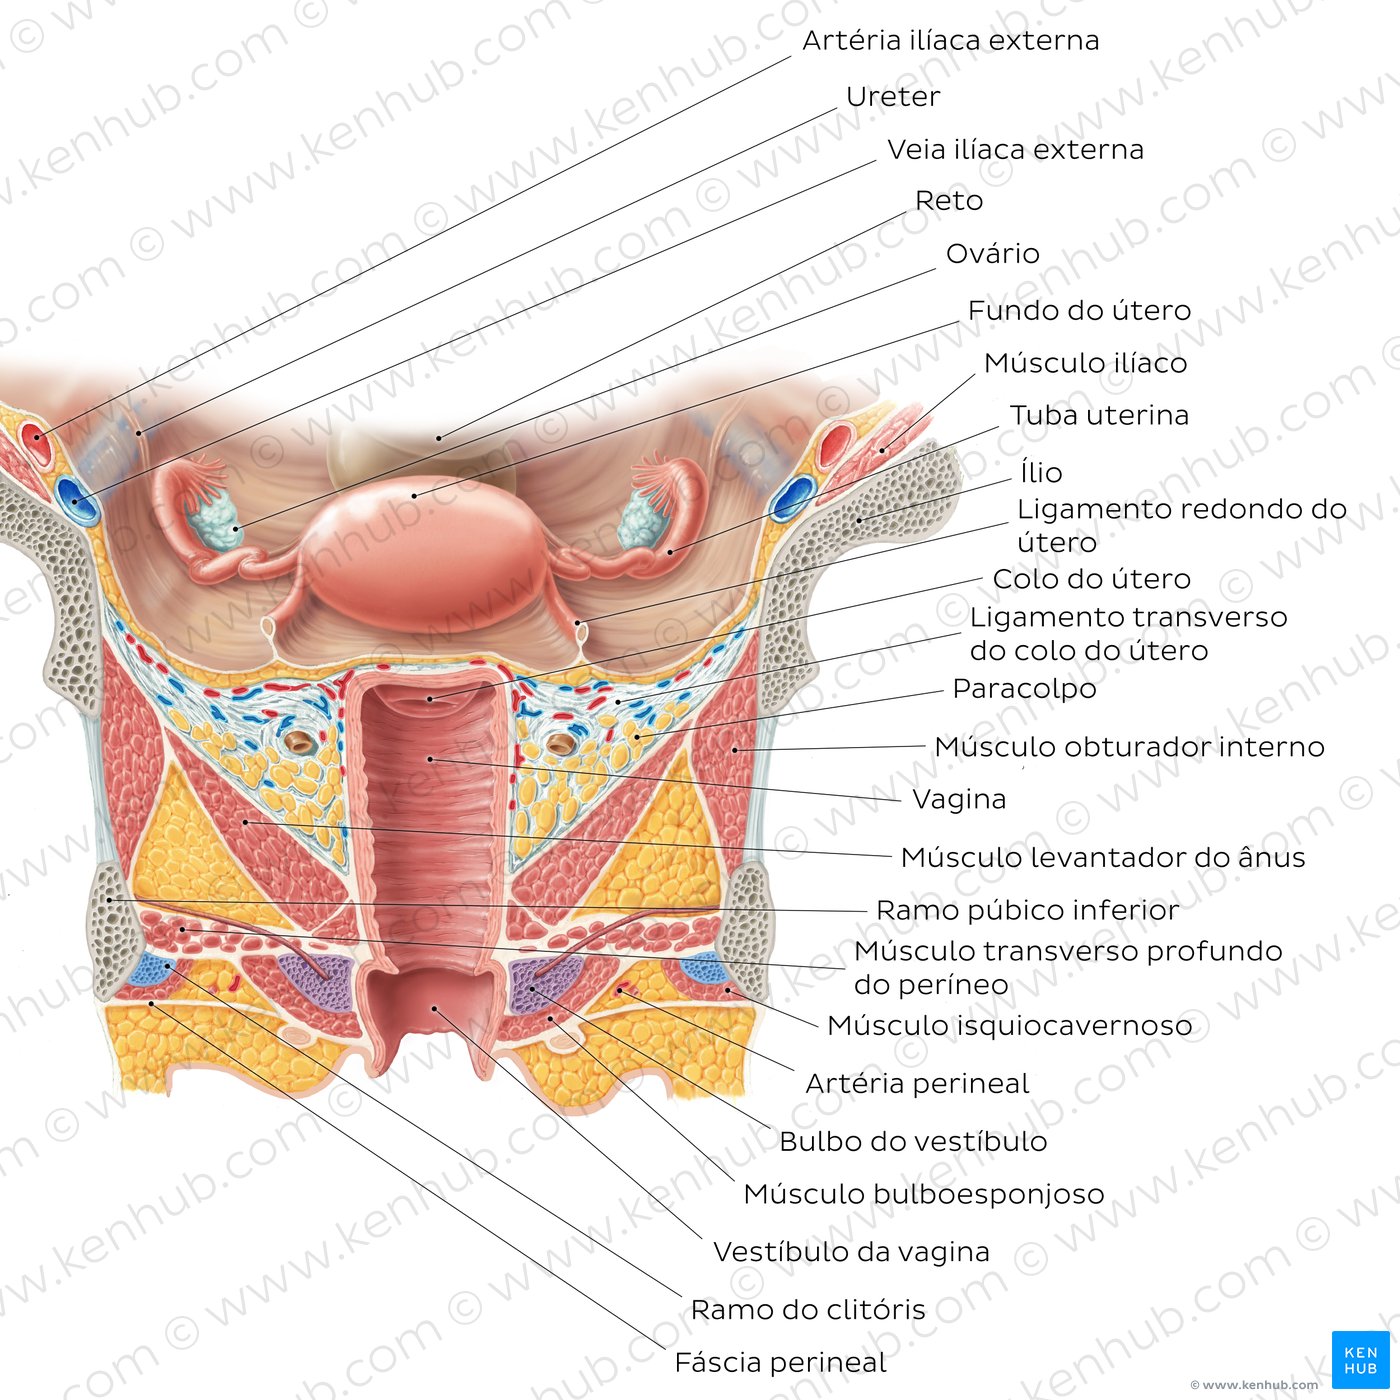 Anatomia da genitália interna feminina - vista anterior